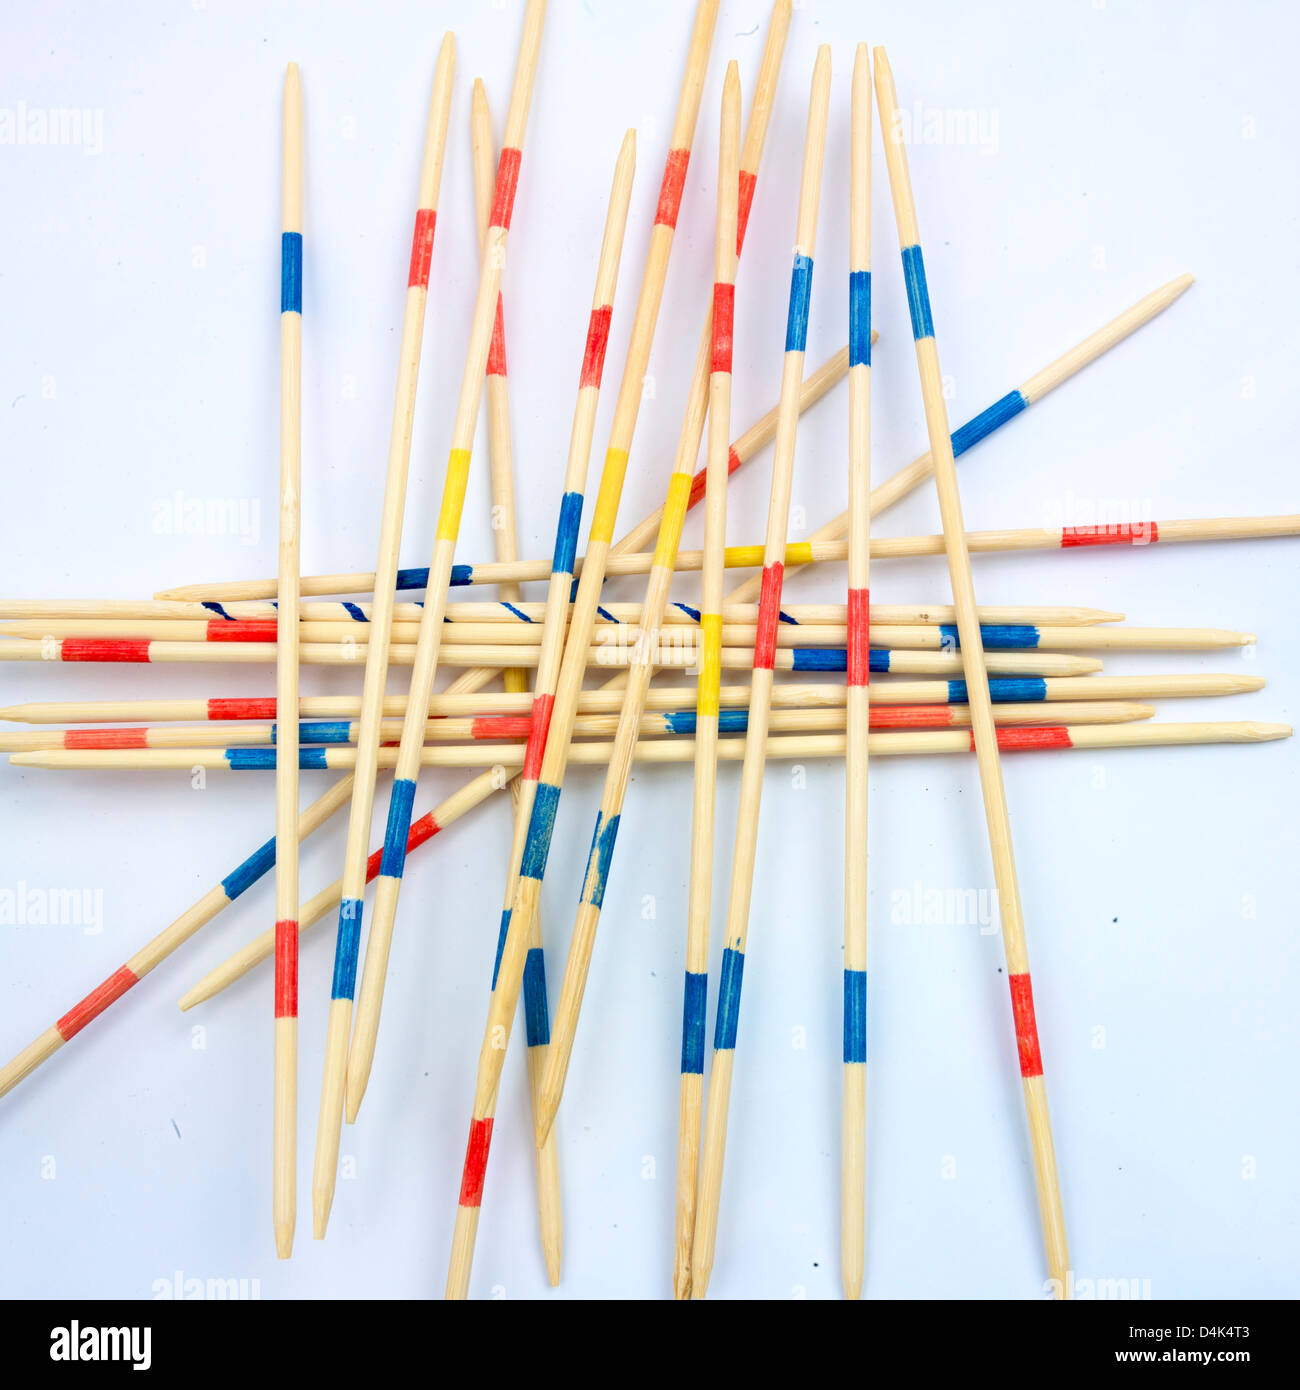 Mikado / pick-up sticks game Stock Photo